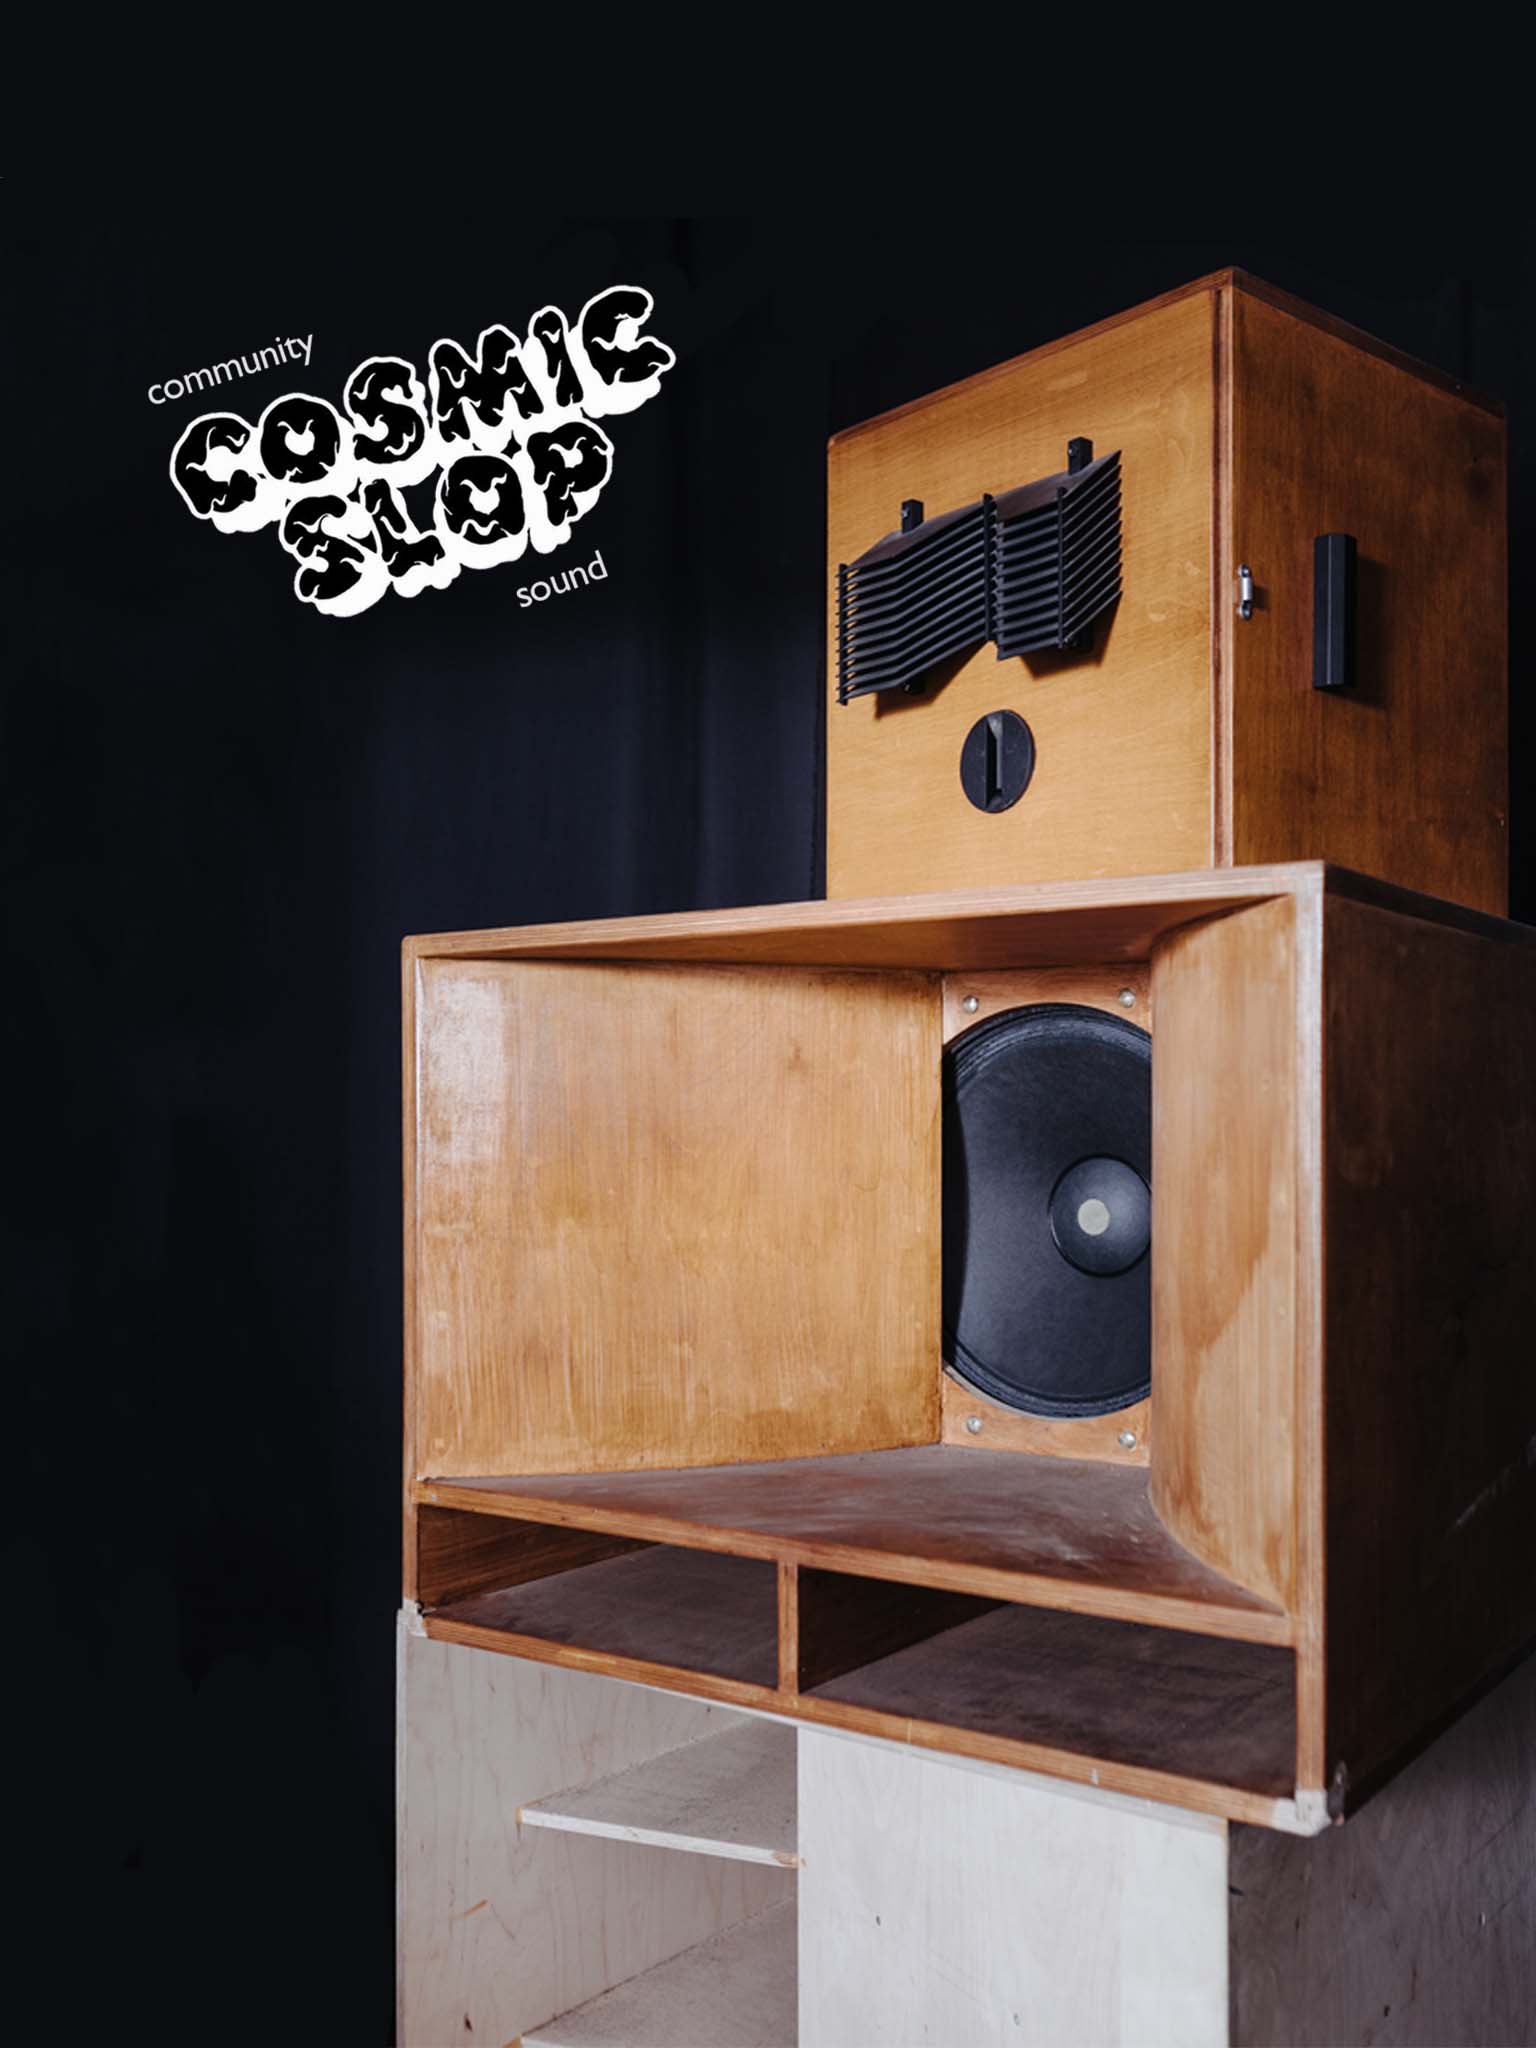 Cosmic Slop: Community sound